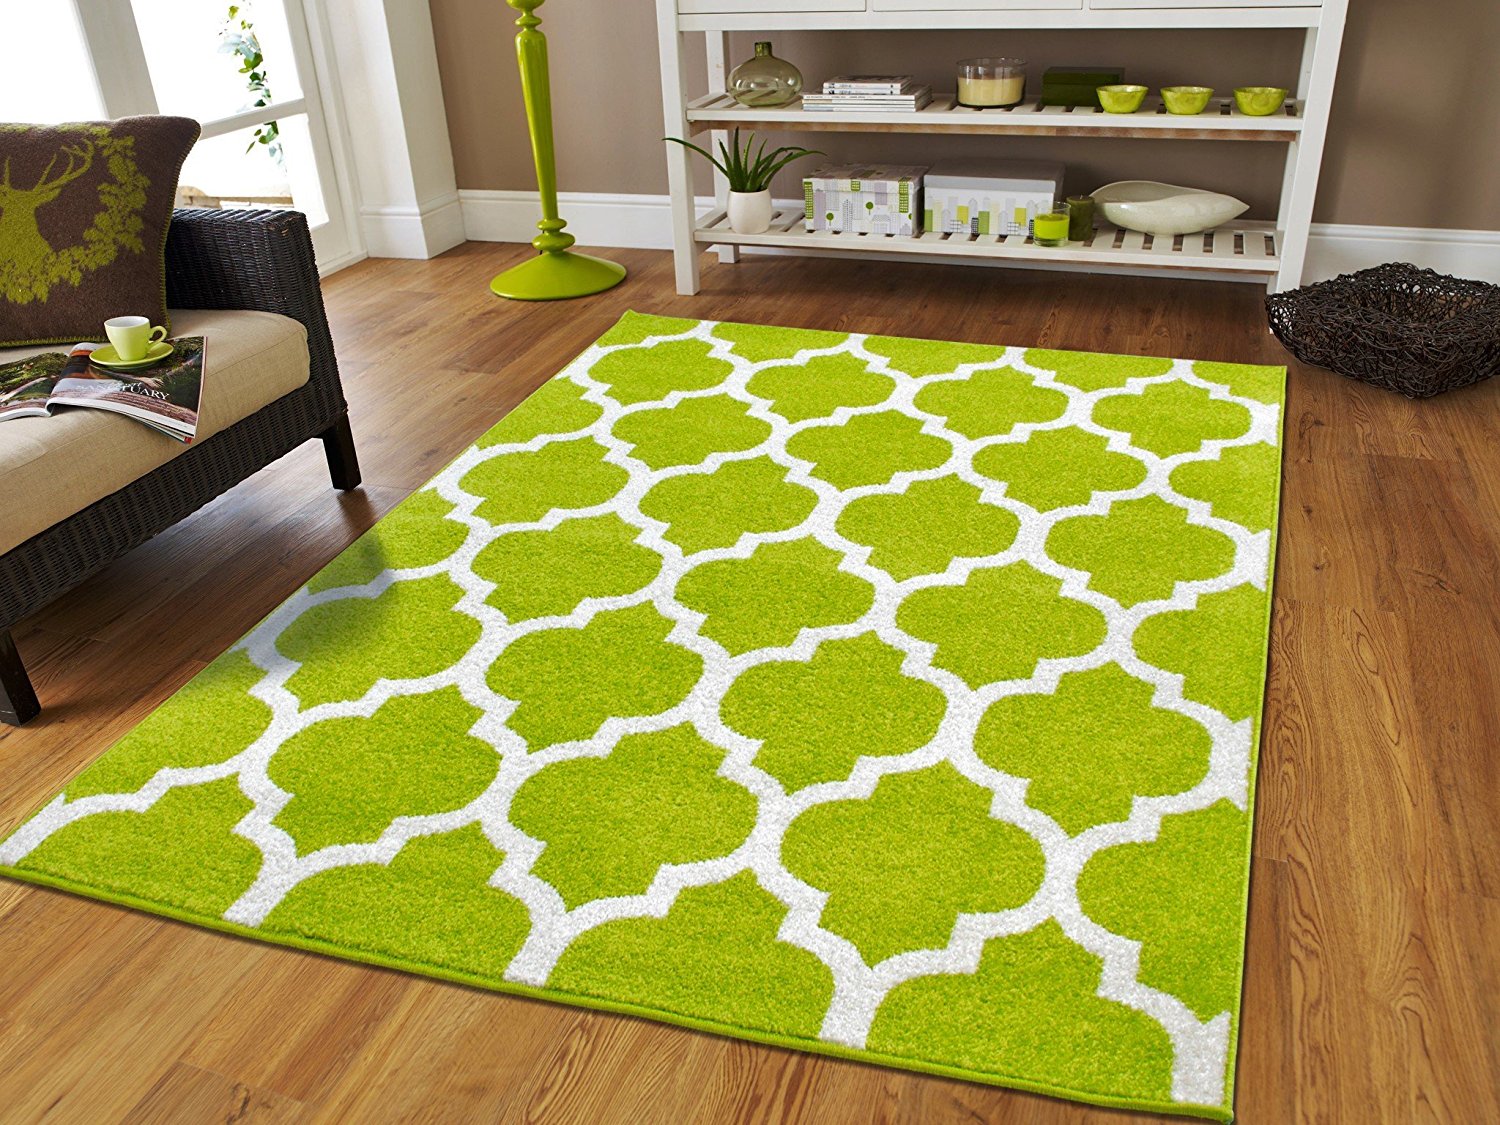 luxury morrocan trellis green rugs 8x10 area rugs under $100 bedroom ...